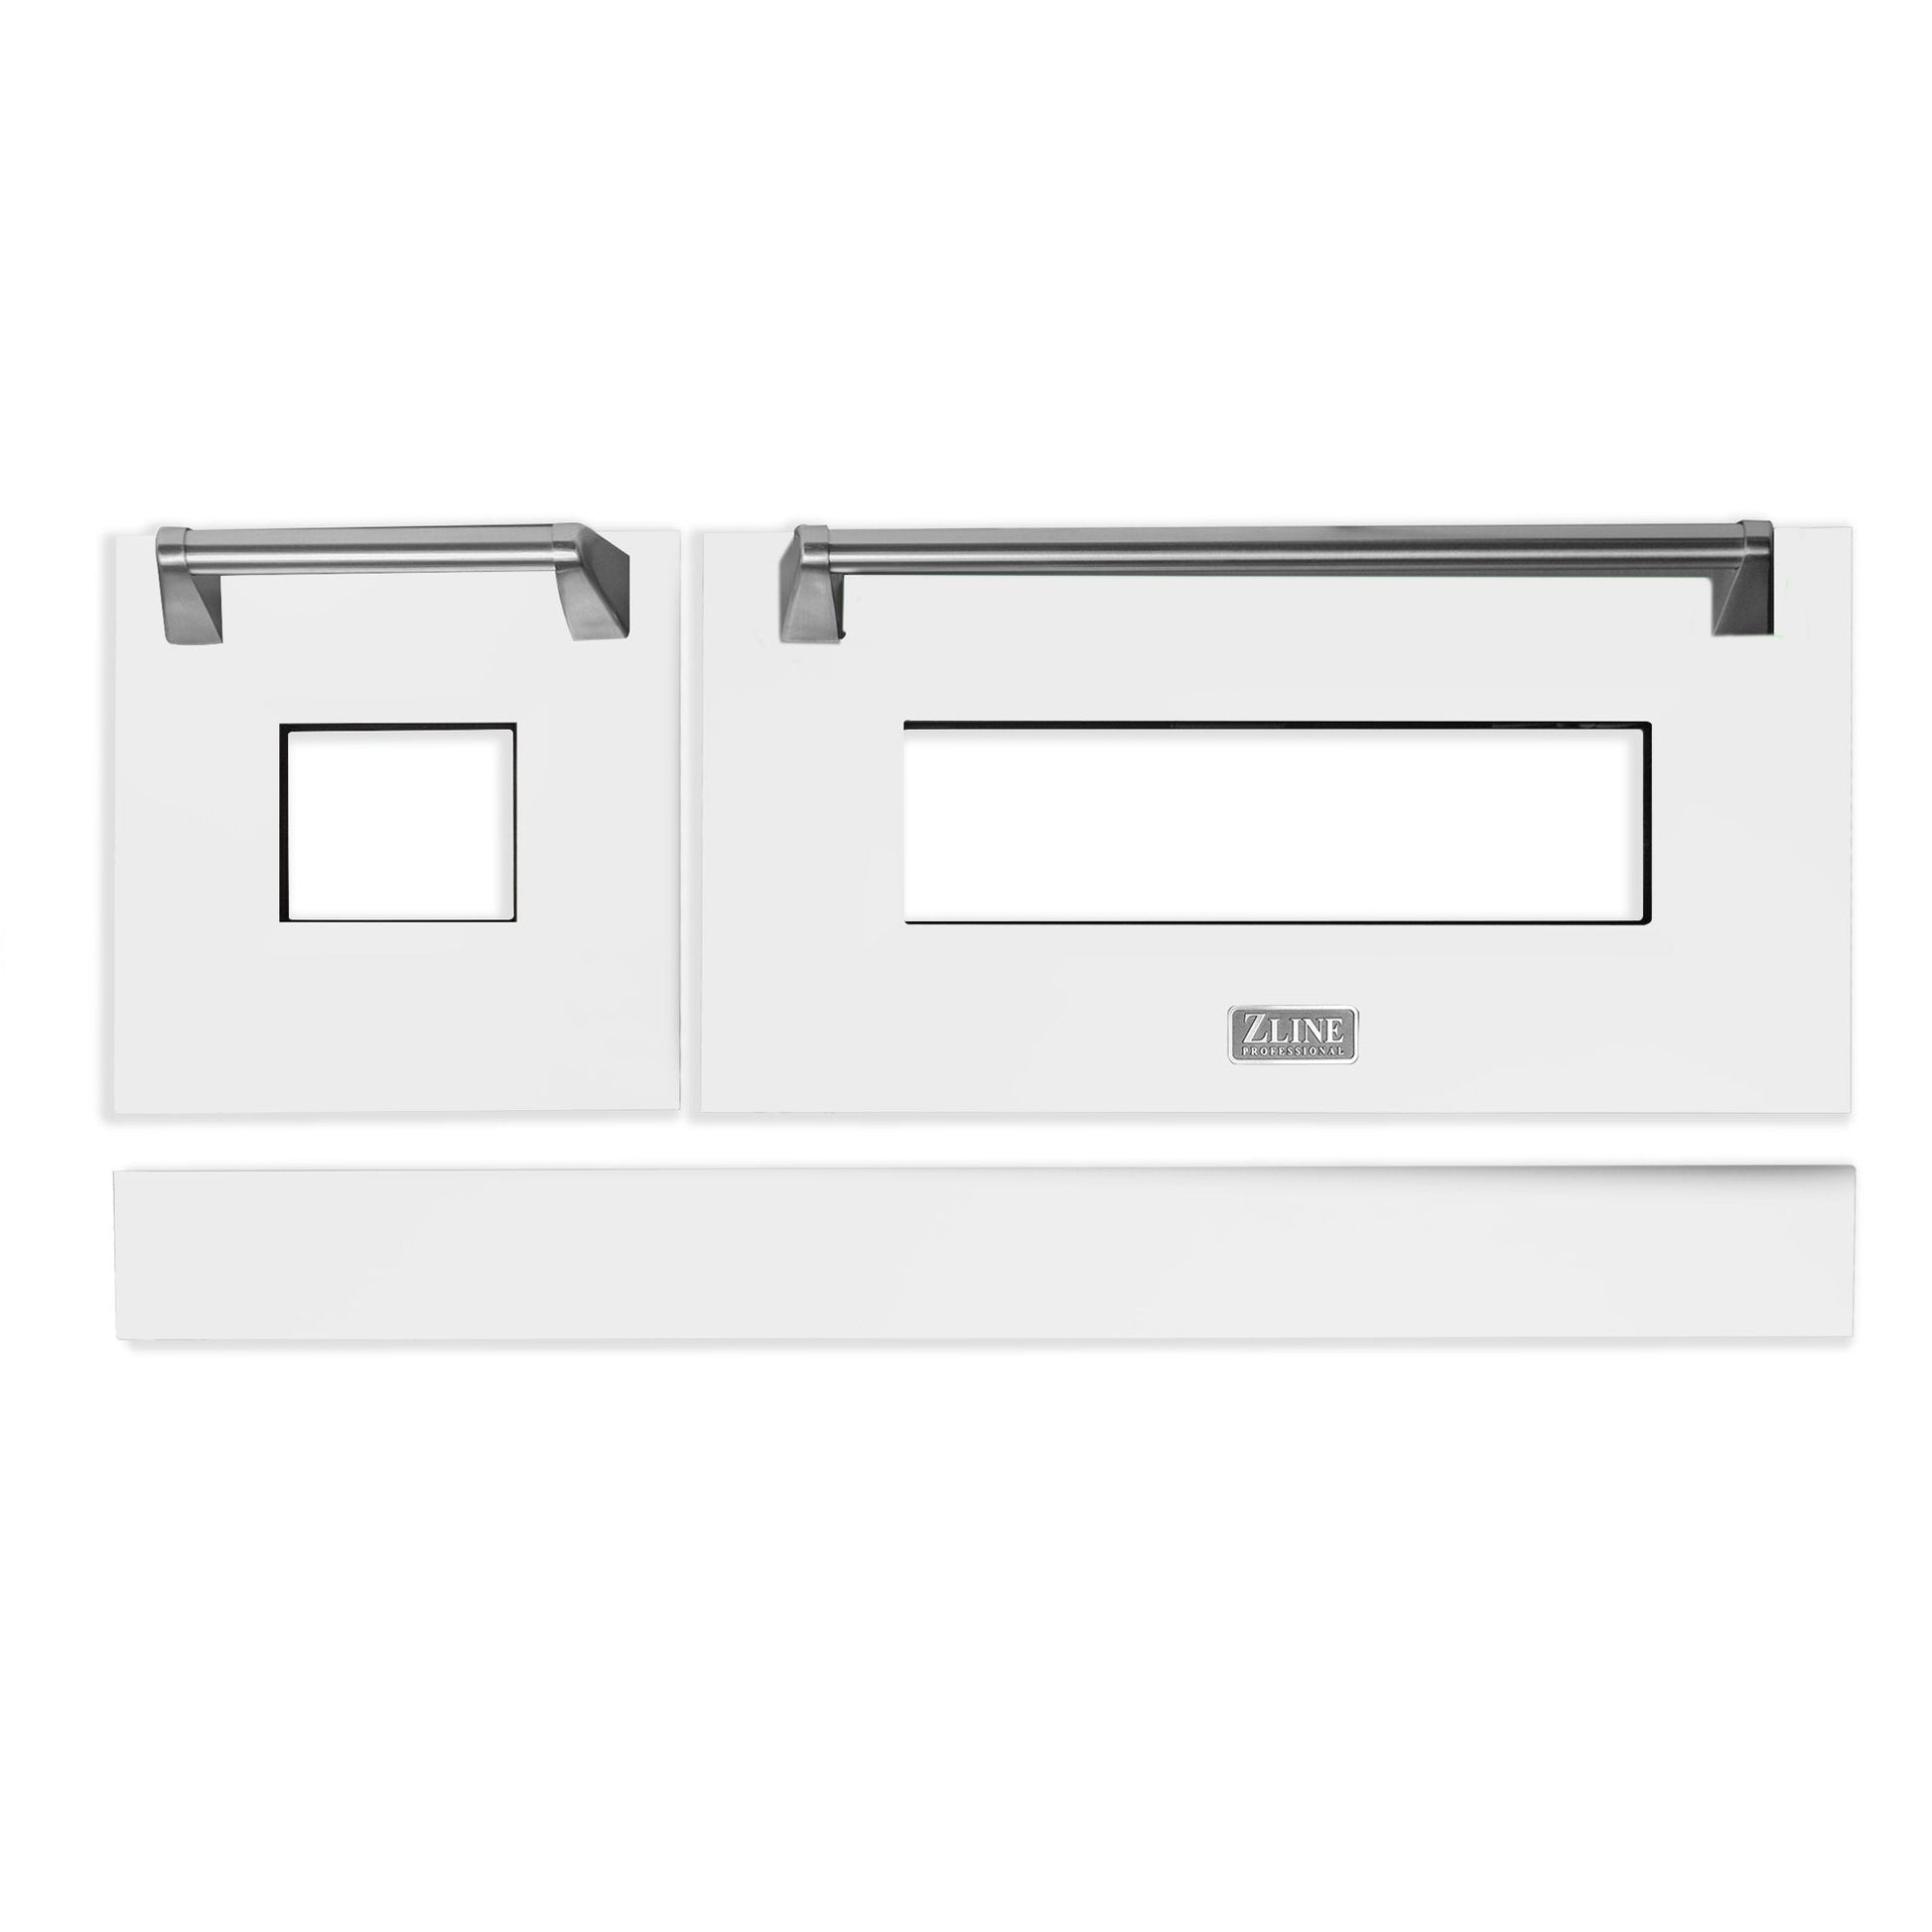 ZLINE 48" DuraSnow Stainless Range Door - Availble in Multiple Color Options